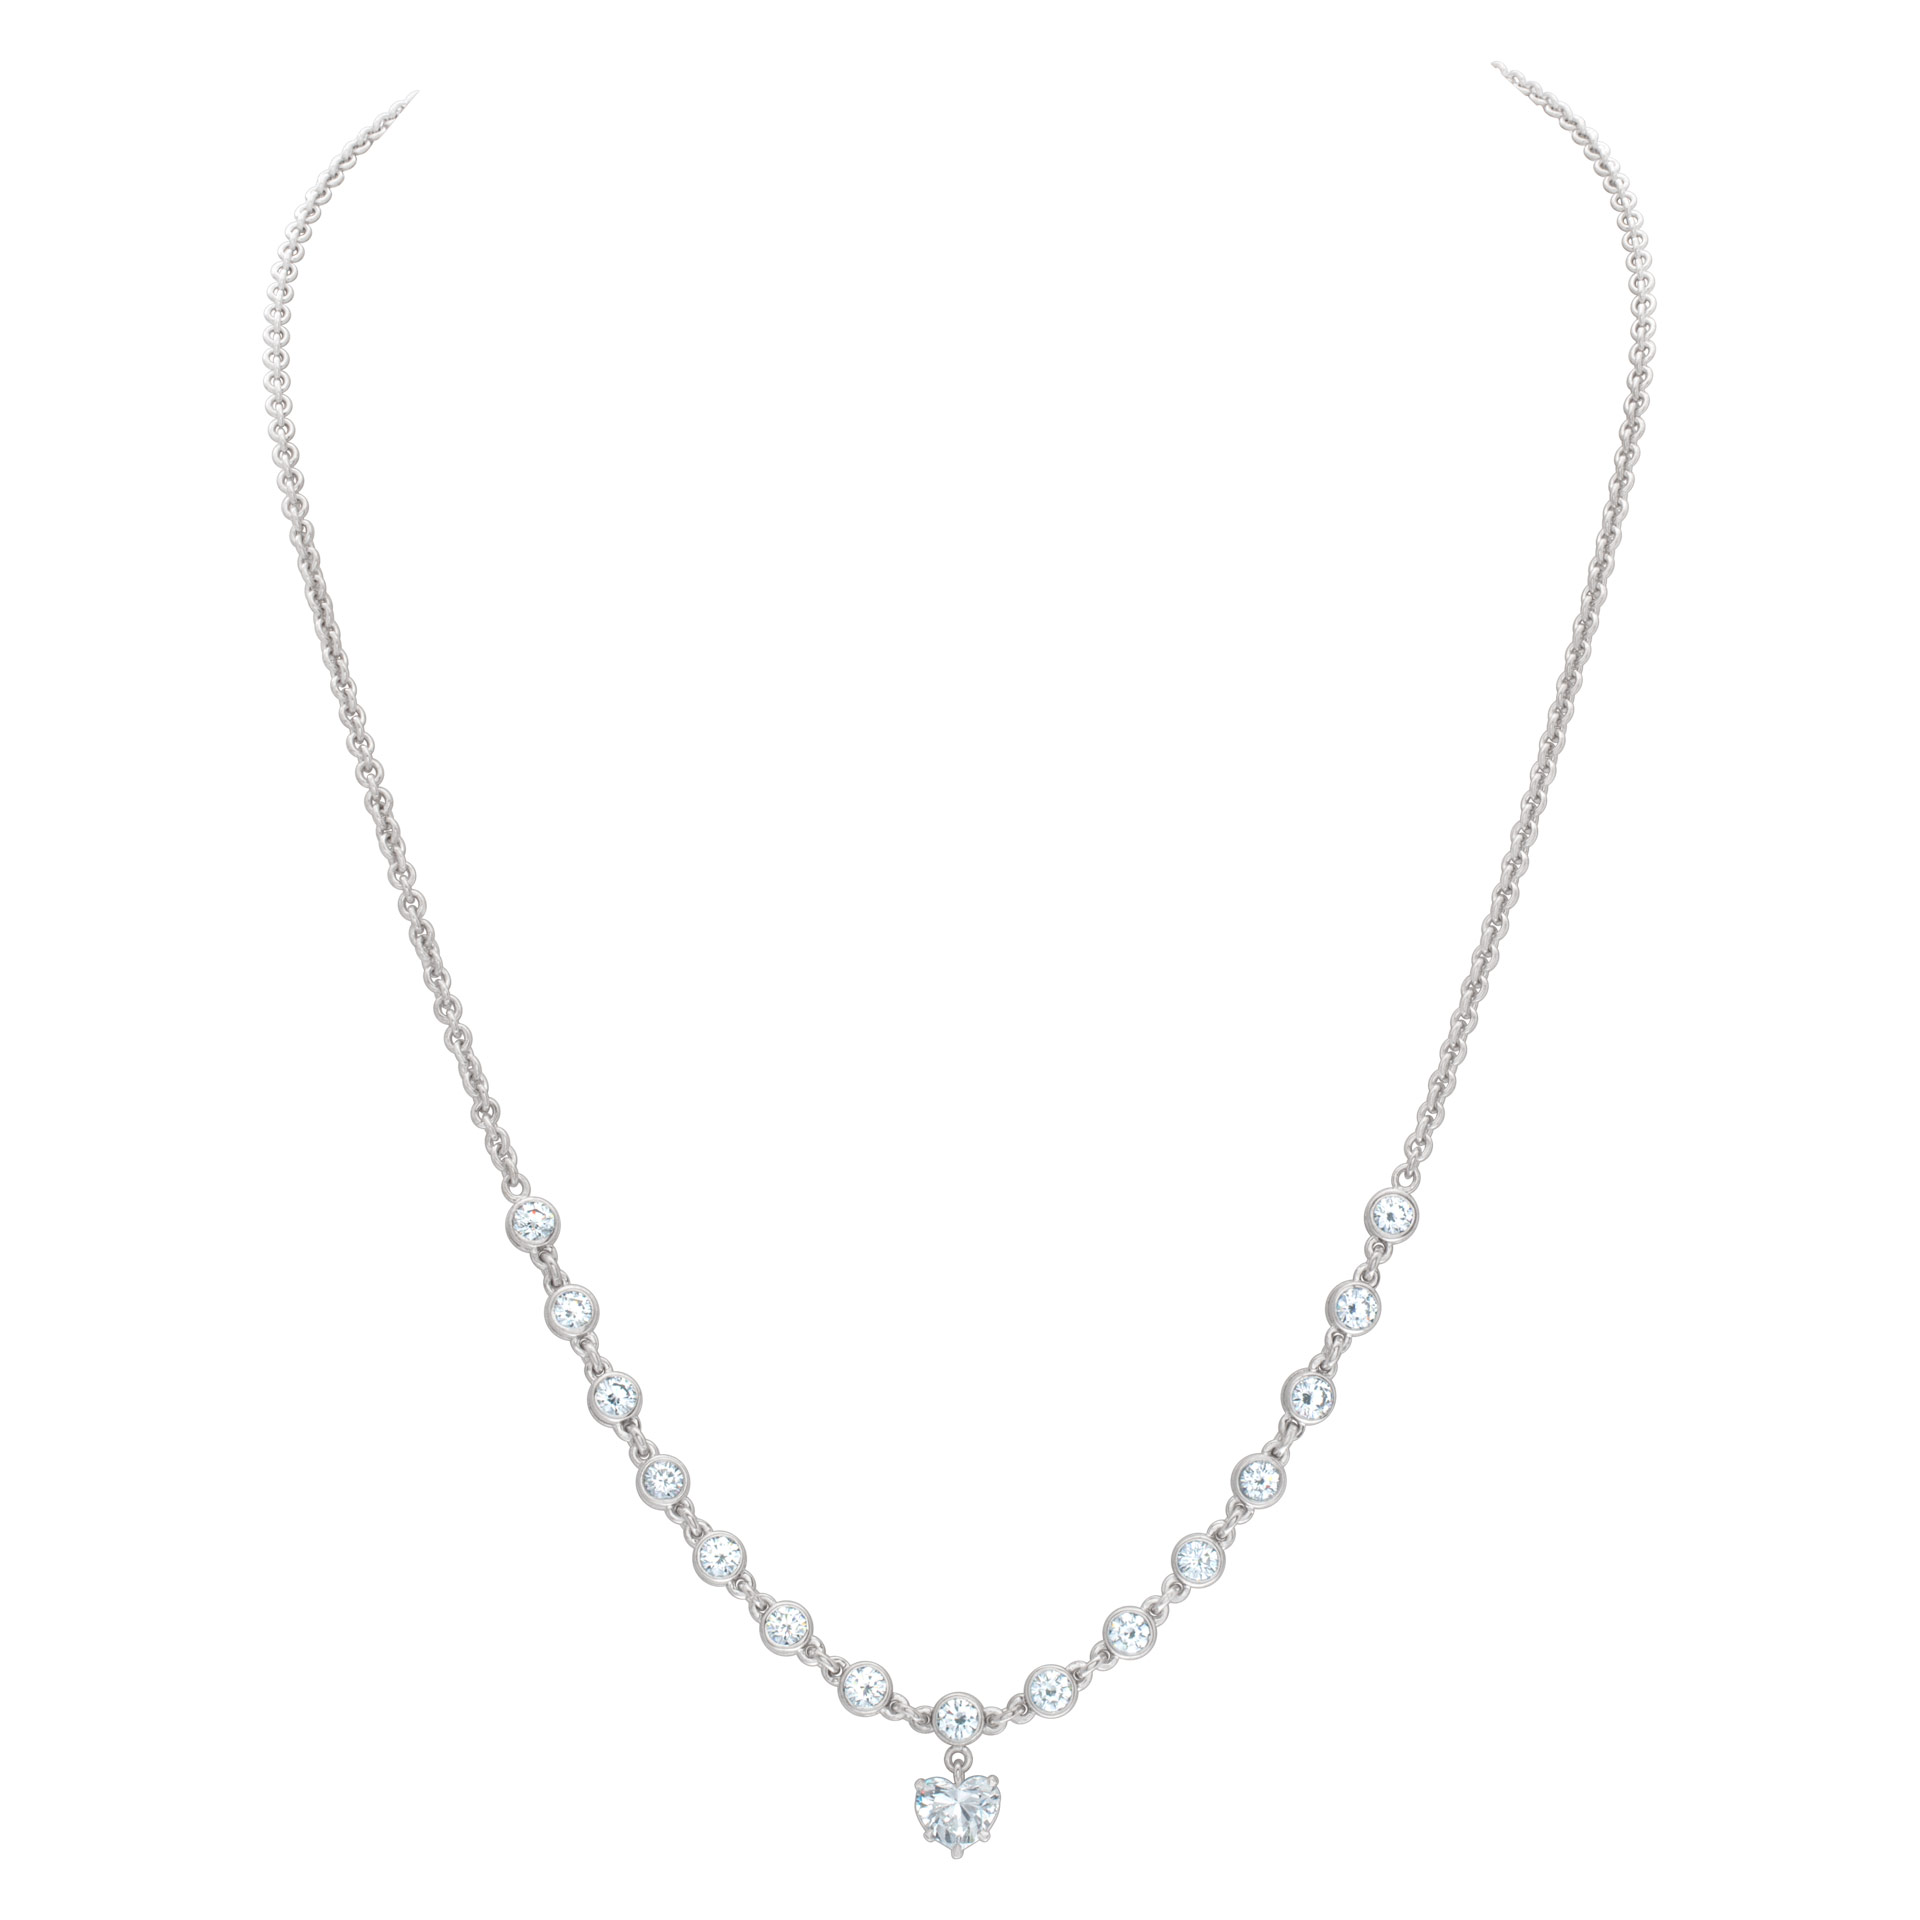 GIA certified heart brilliant cut diamond 1 carat (F color, VS2 clarity) necklace with bezel set round full cut diamonds